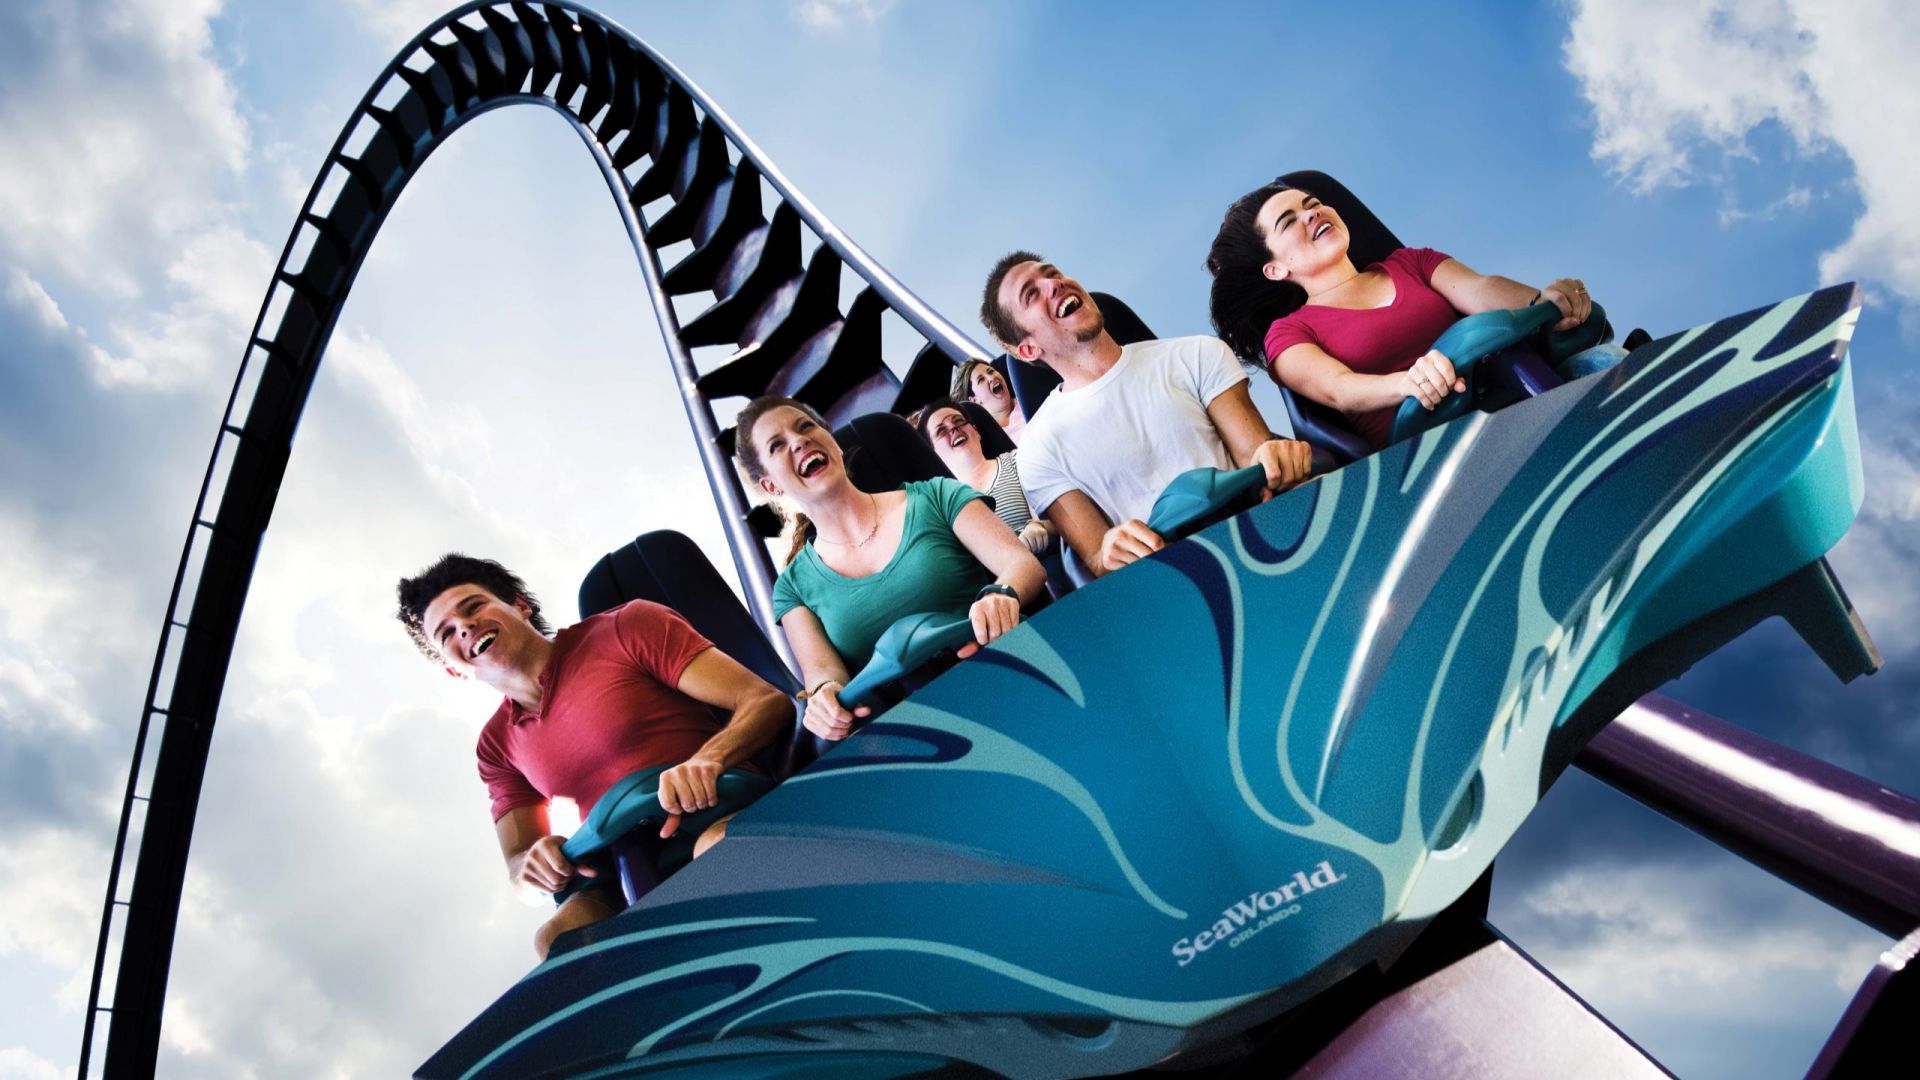 SeaWorld Orlando & Aquatica 2-Park Ticket